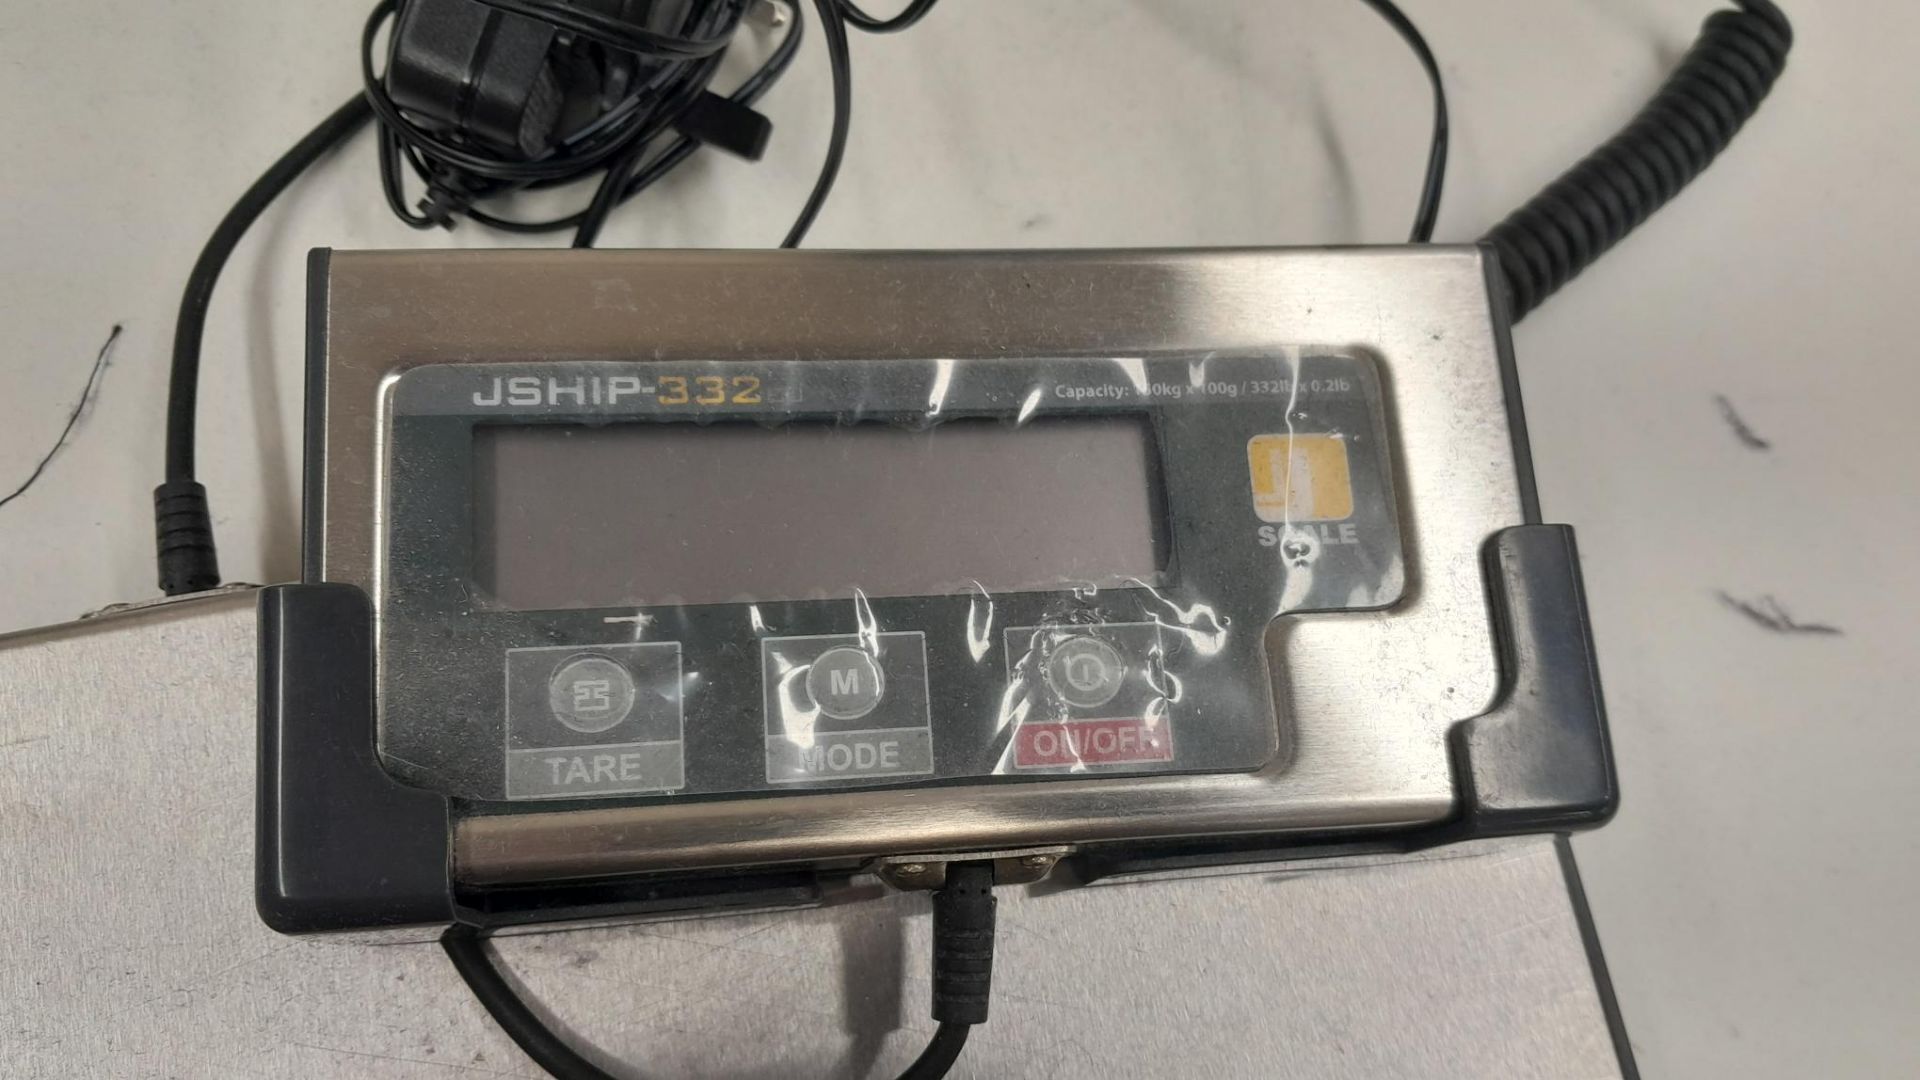 Jship 332 digital weigh scales, 240V - Image 2 of 2